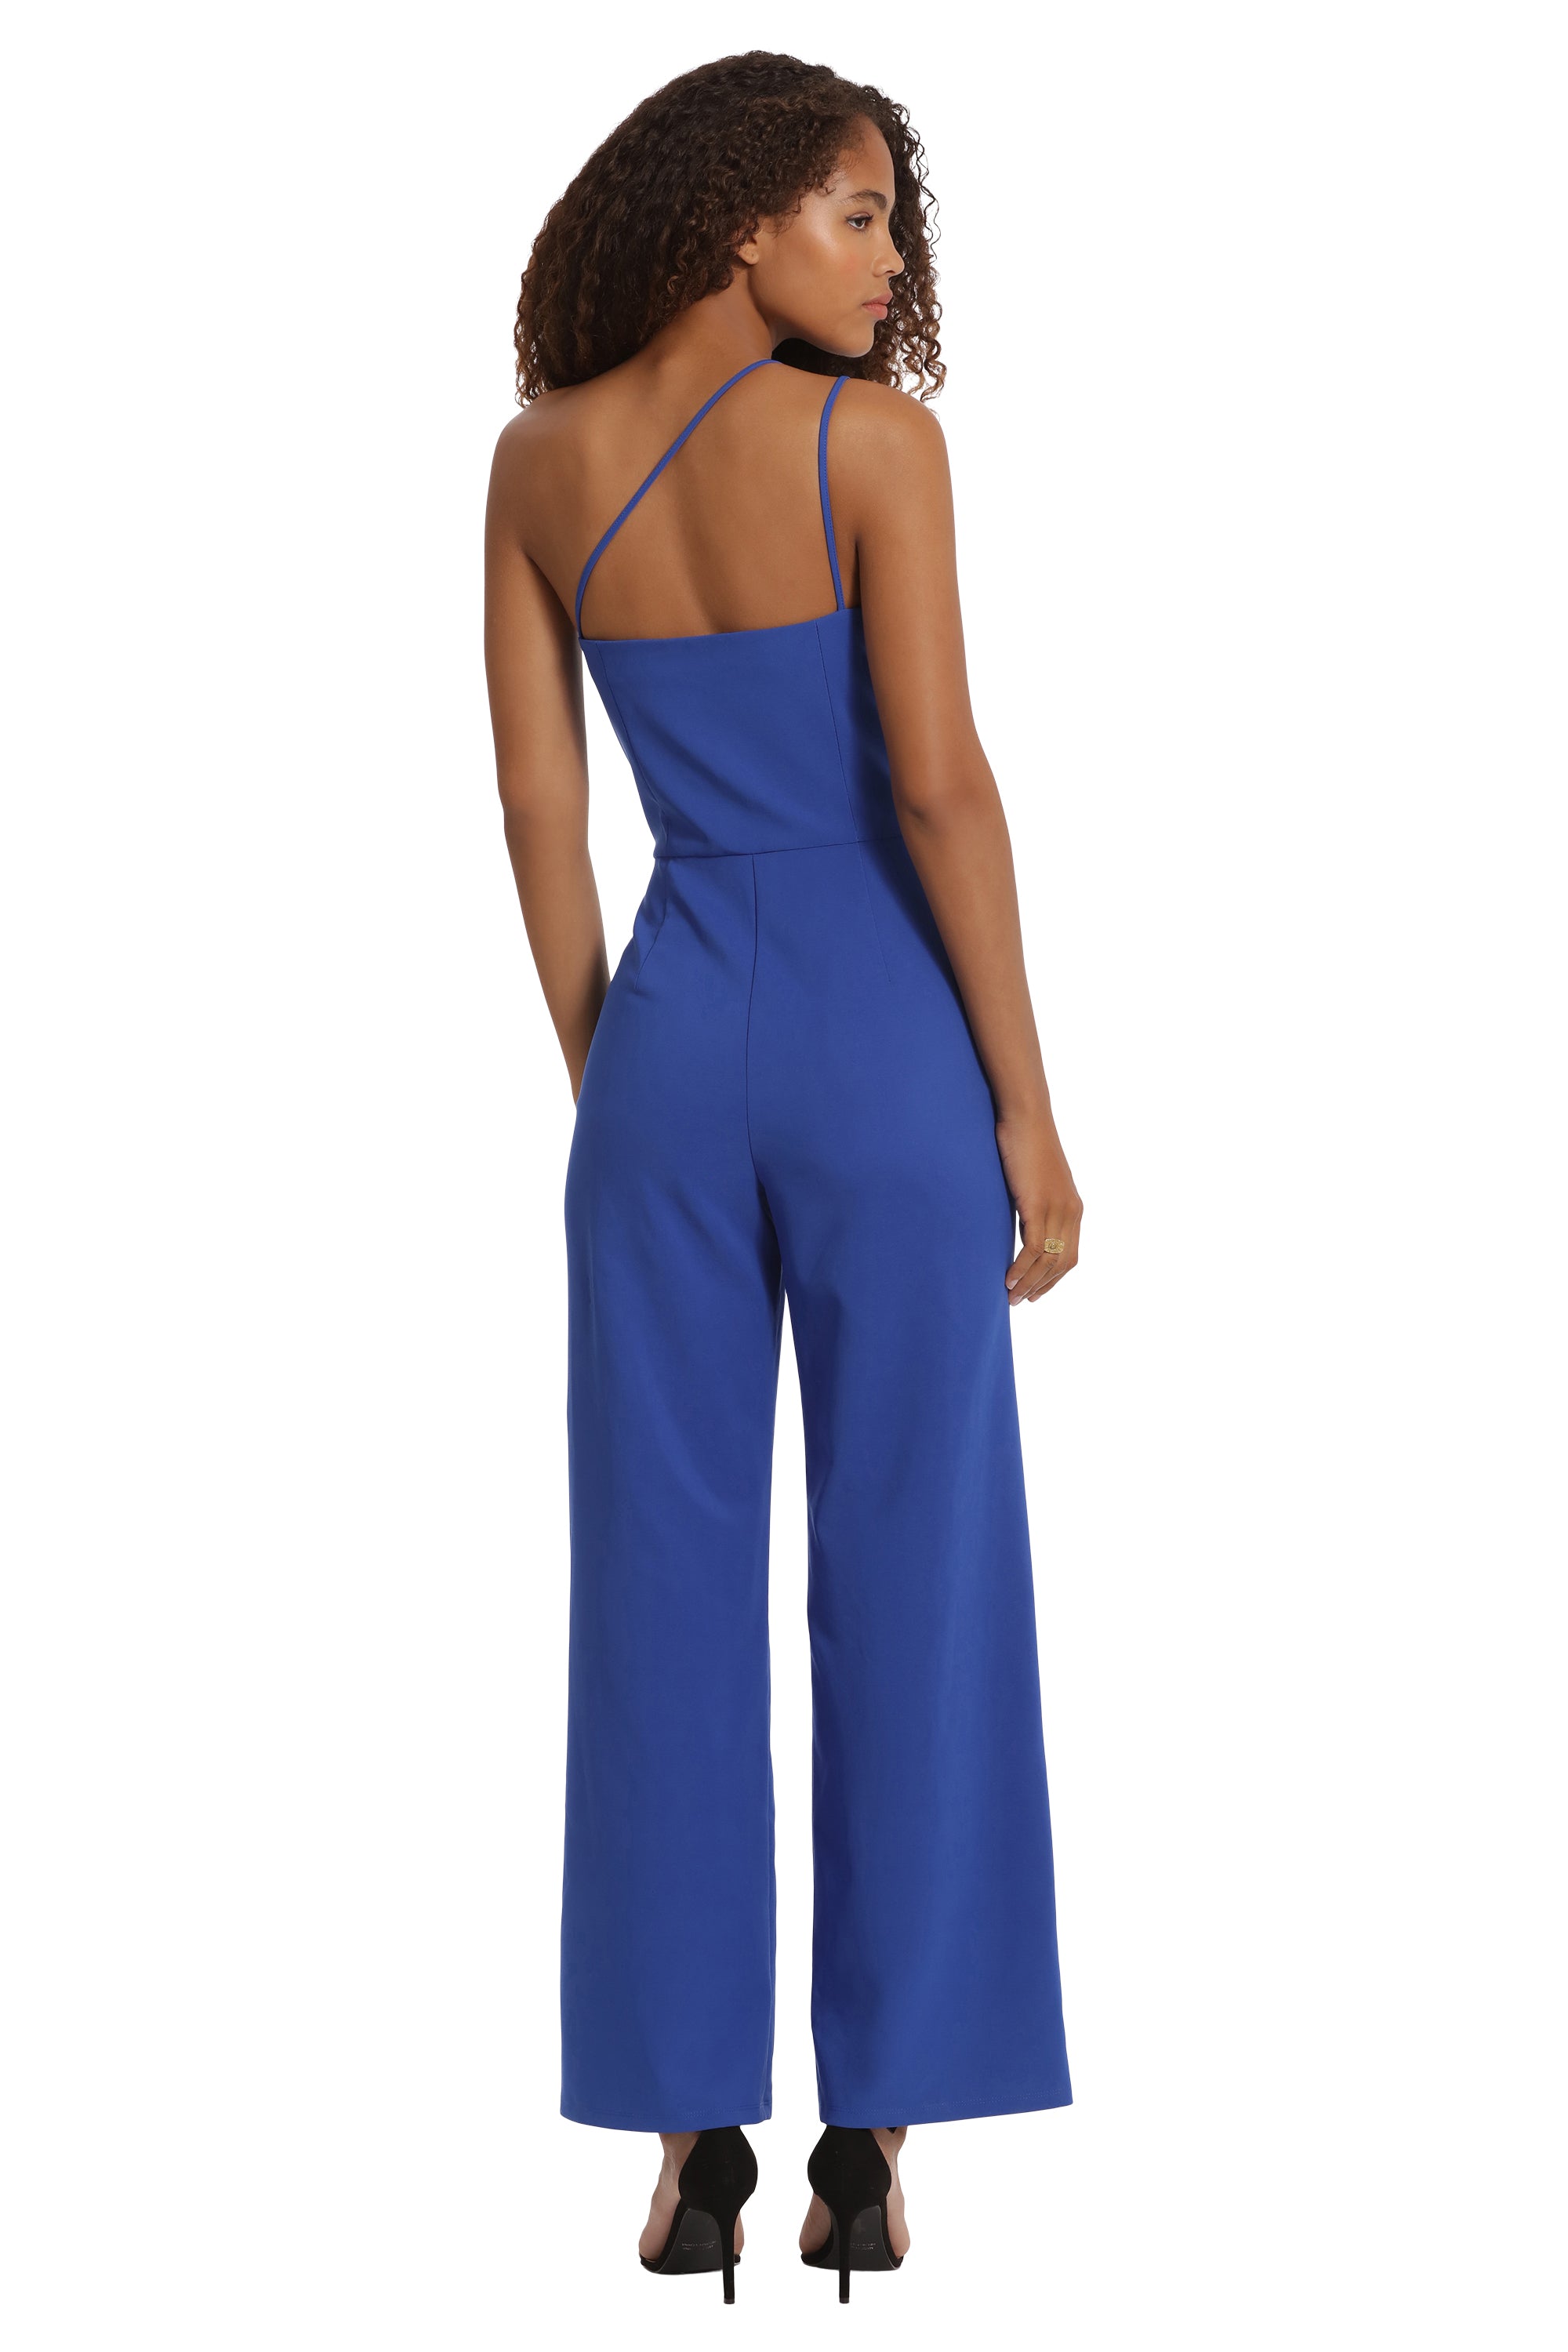 Strapless Gauze Jumpsuit w/ Ruffle Top & Pockets by Elan - Royal Blue -  Miss Monroe Boutique